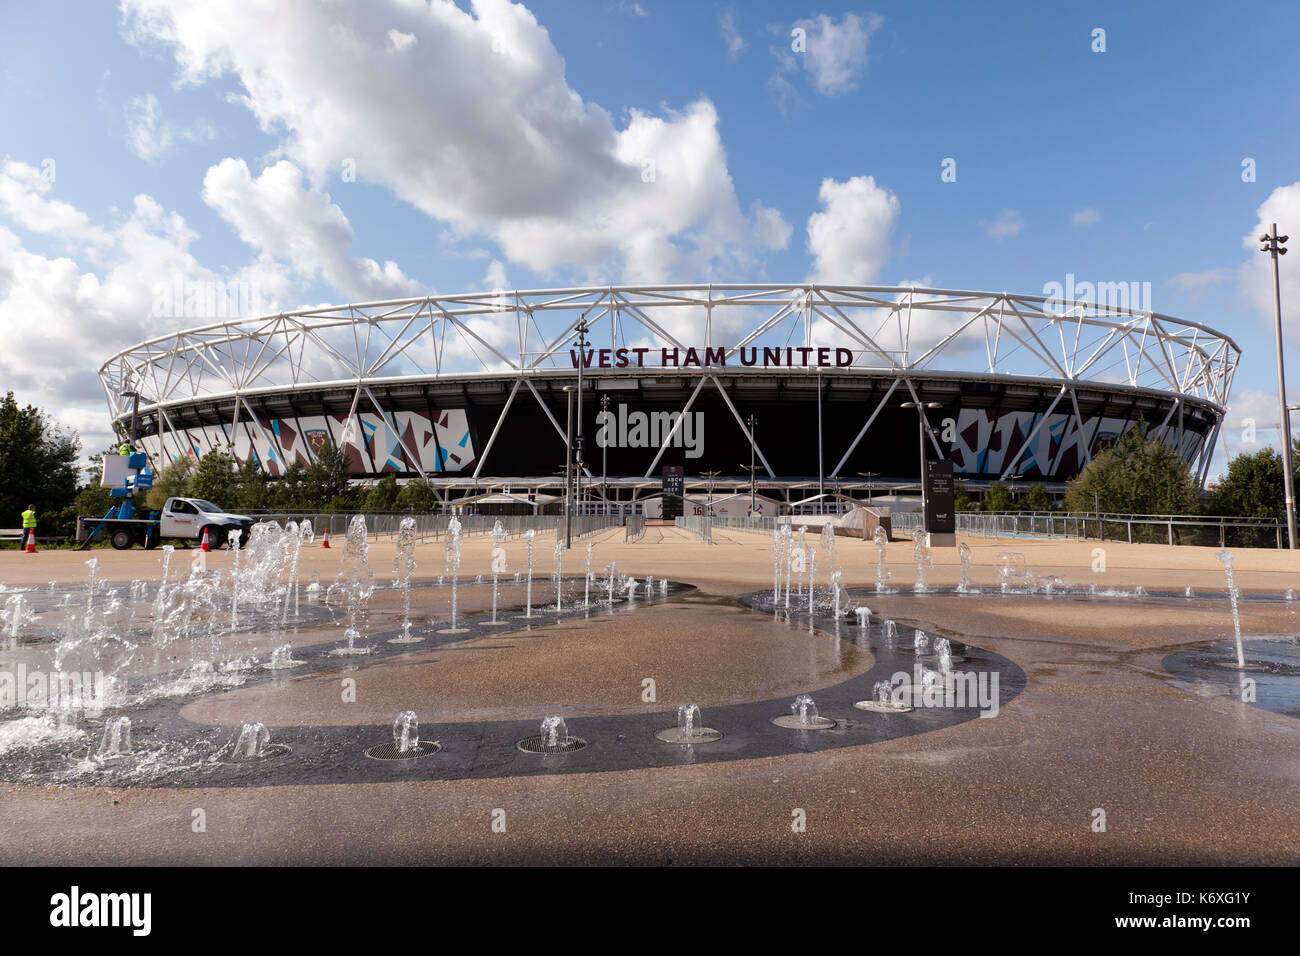 Vue sur le West Ham United Football Club, stade Queen Elizabeth Olympic Park, Stratford Banque D'Images